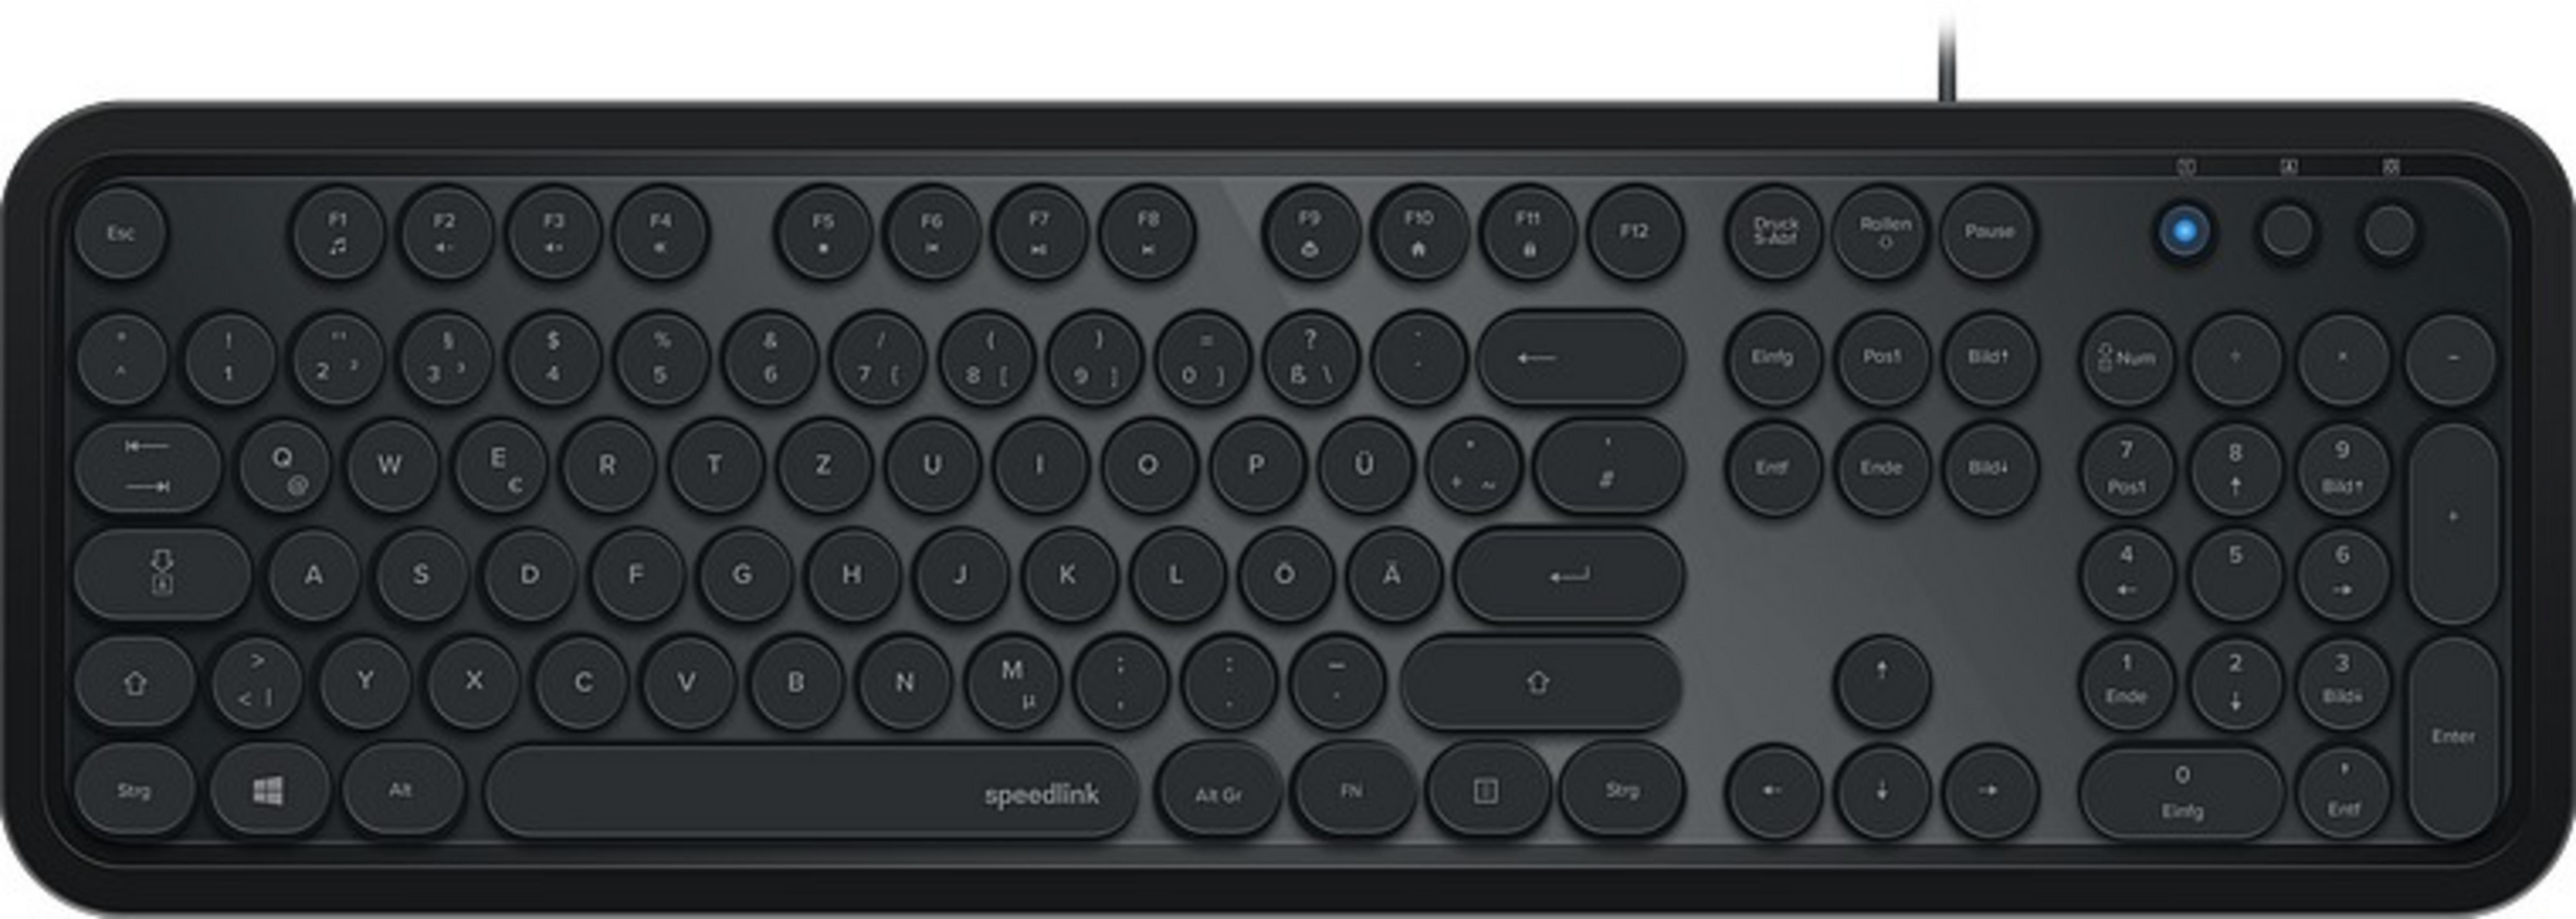 SPEEDLINK SL-640004-BK RETRO BLACK, Tastatur CIRCLE